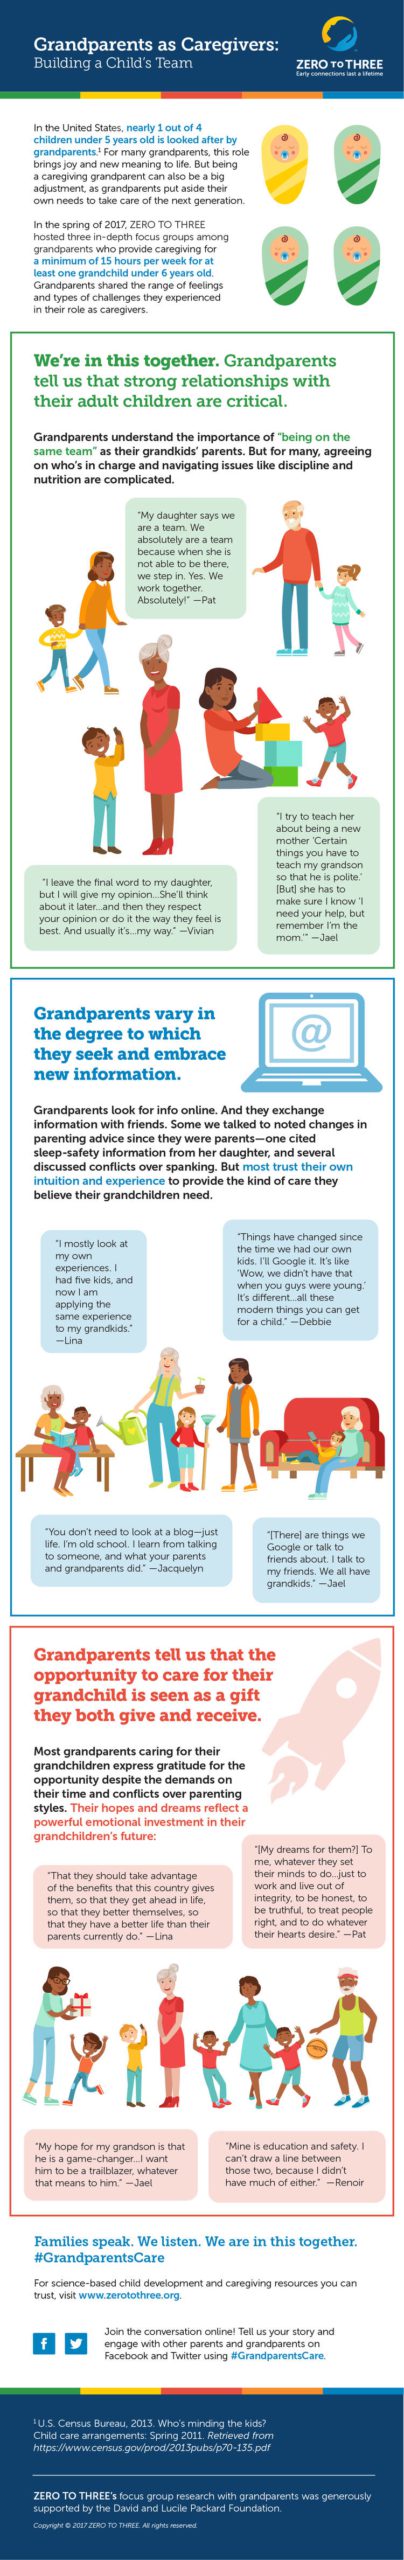 Infographic: Grandparents as Caregivers